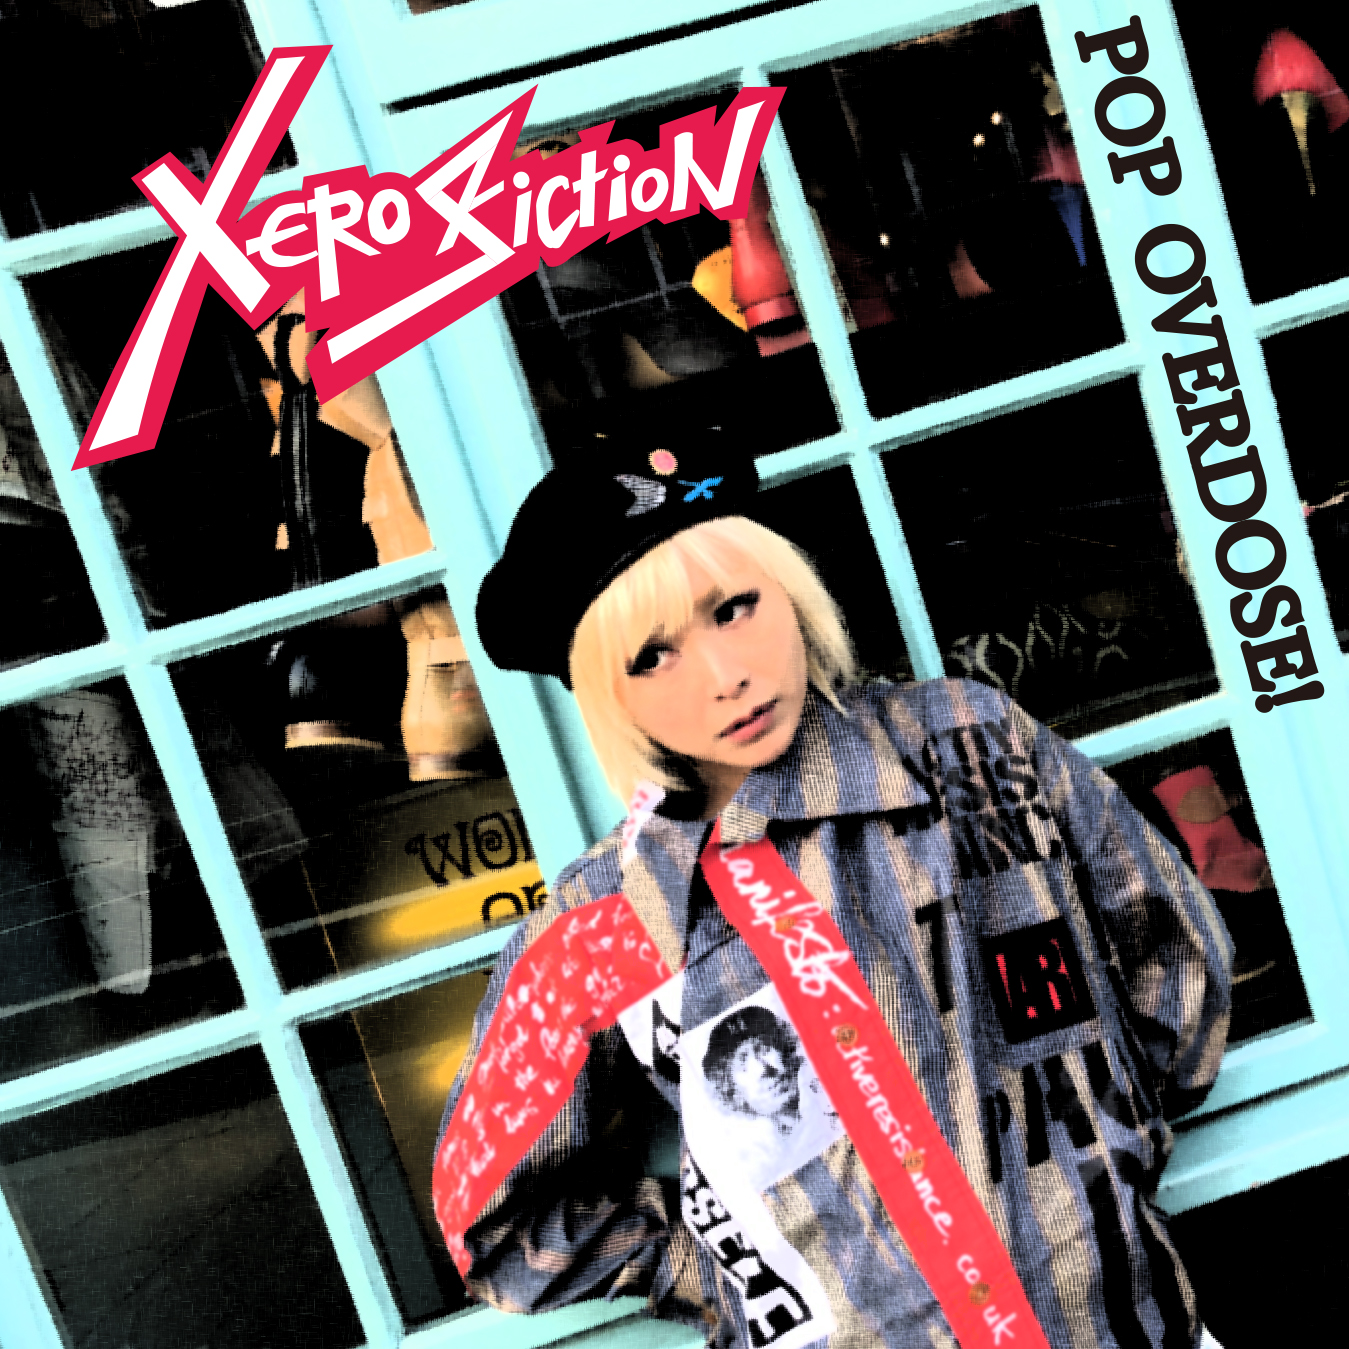 XERO FICTION、5/22発売のフルアルバム「POP OVERDOSE!」から「Believe in my way」MV公開！＆レコ発ツアー決定！